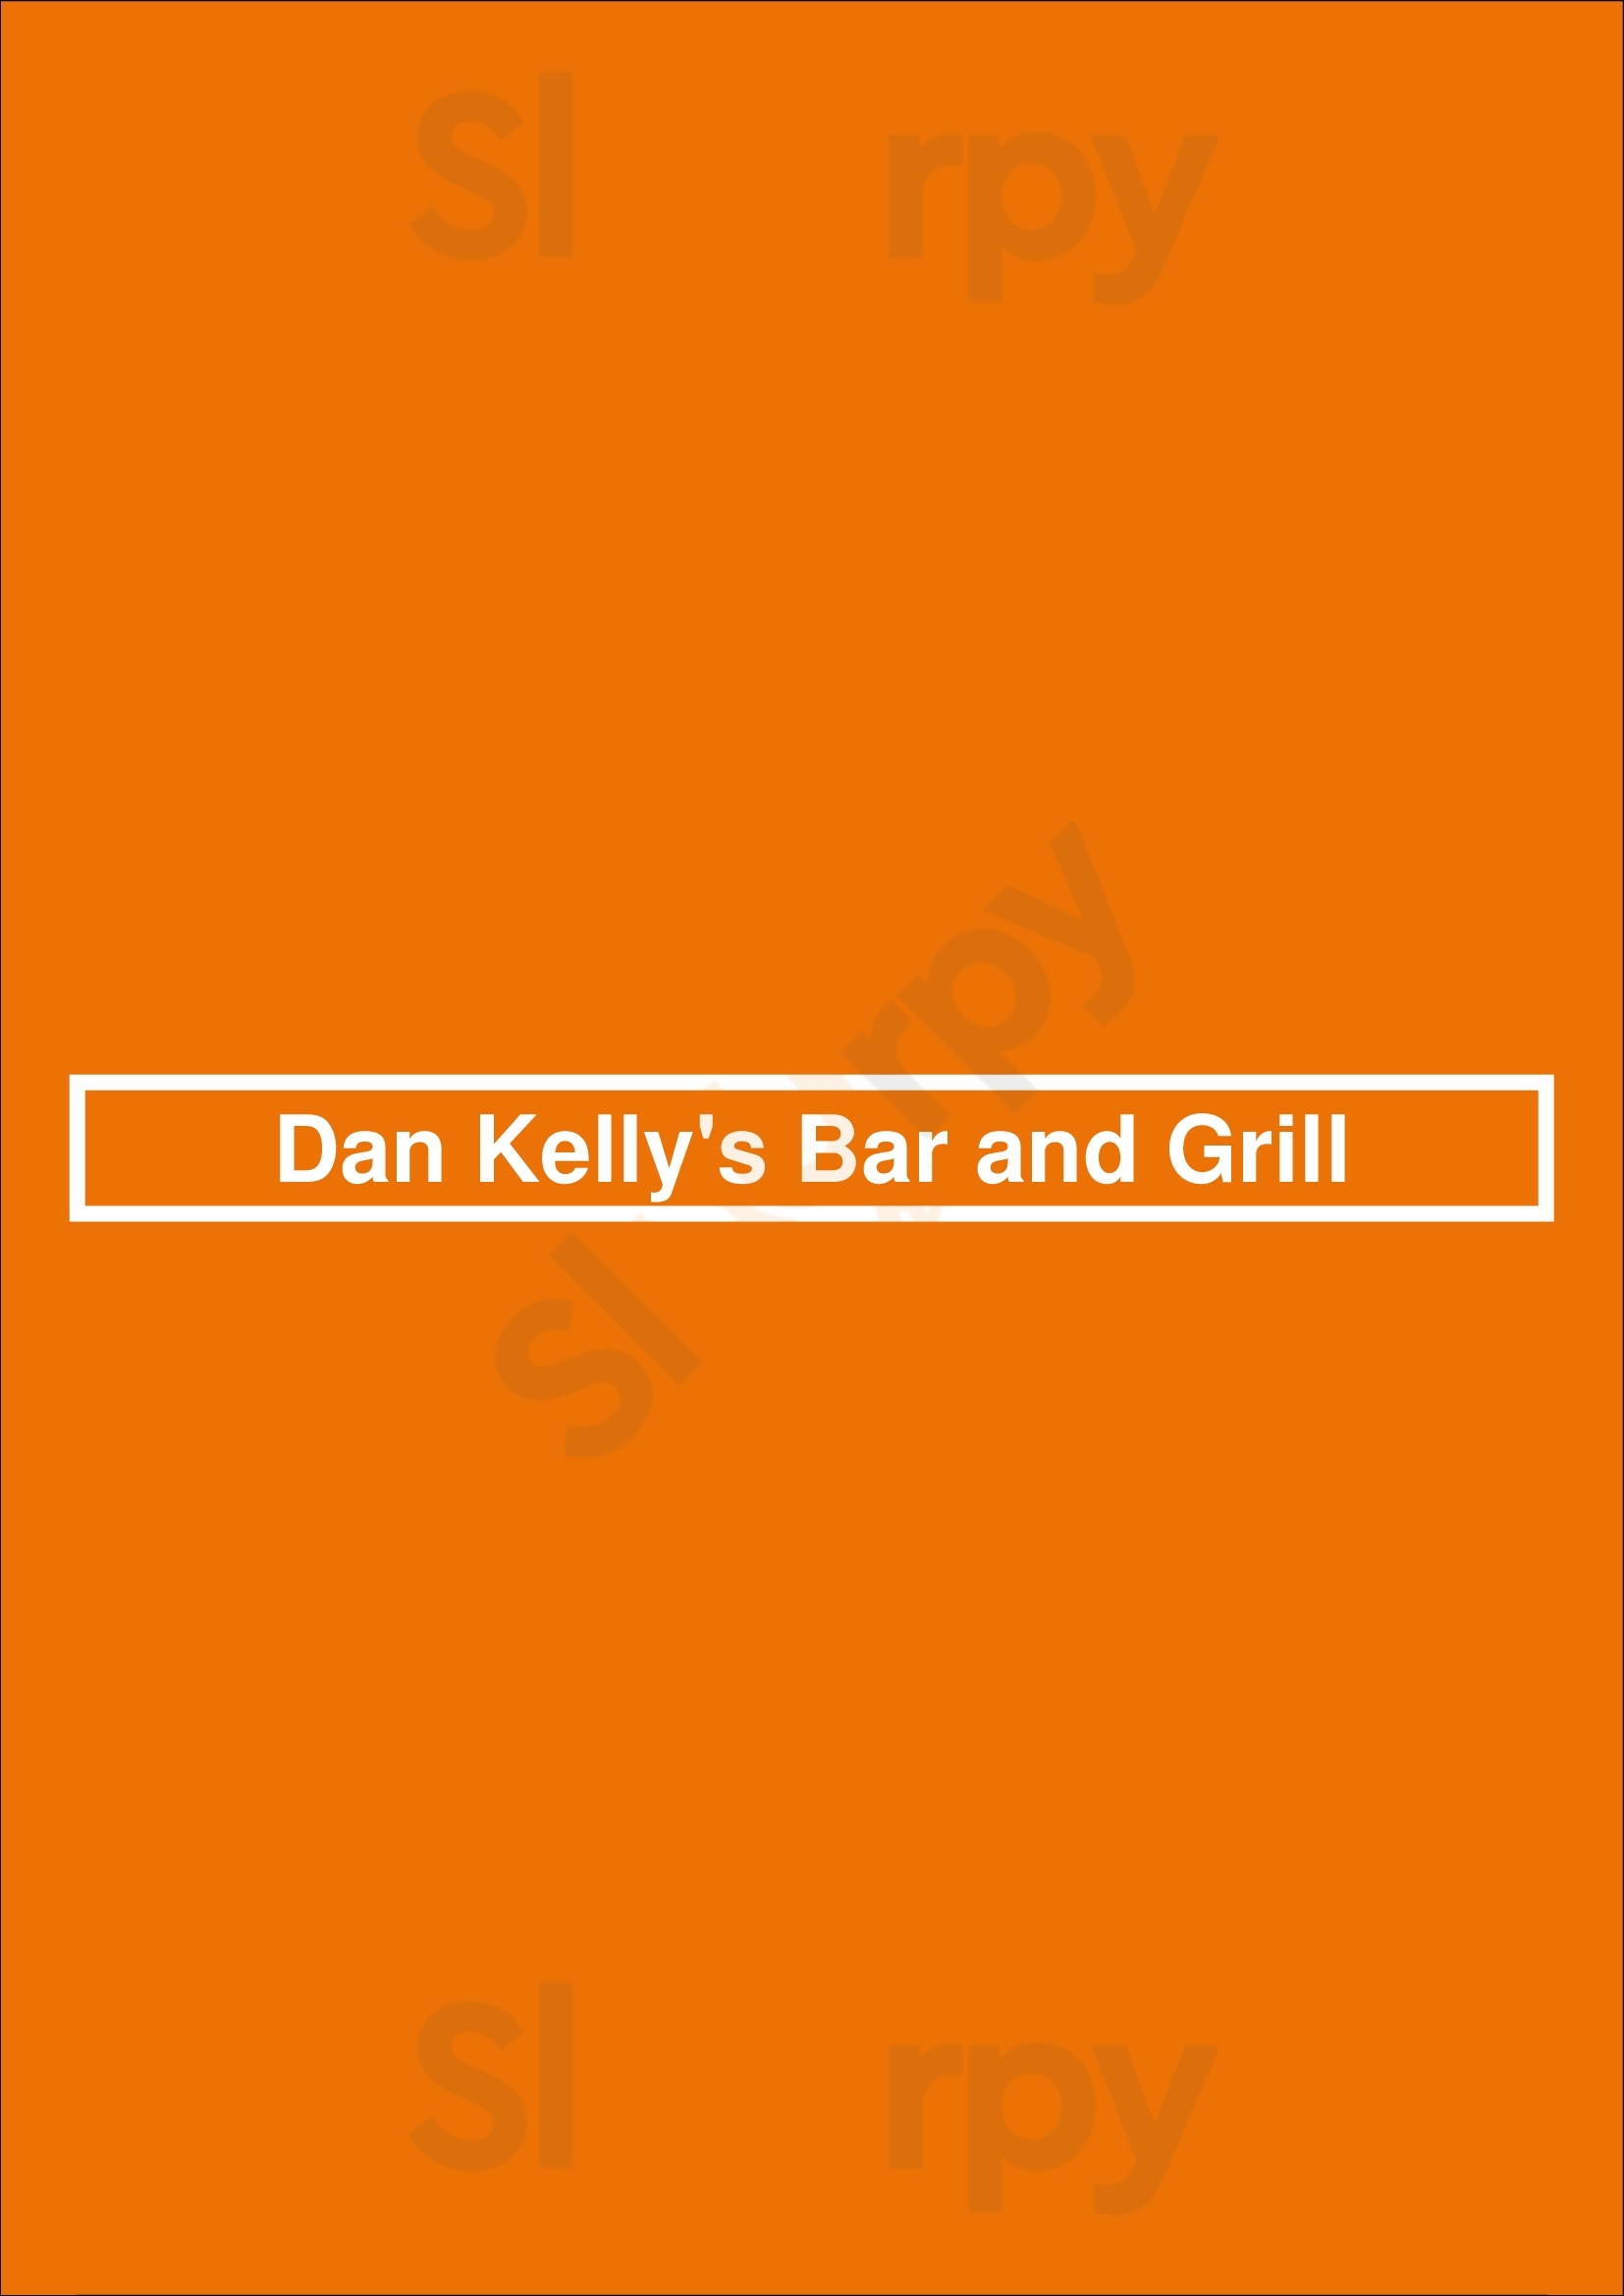 Dan Kelly's Bar And Grill Minneapolis Menu - 1